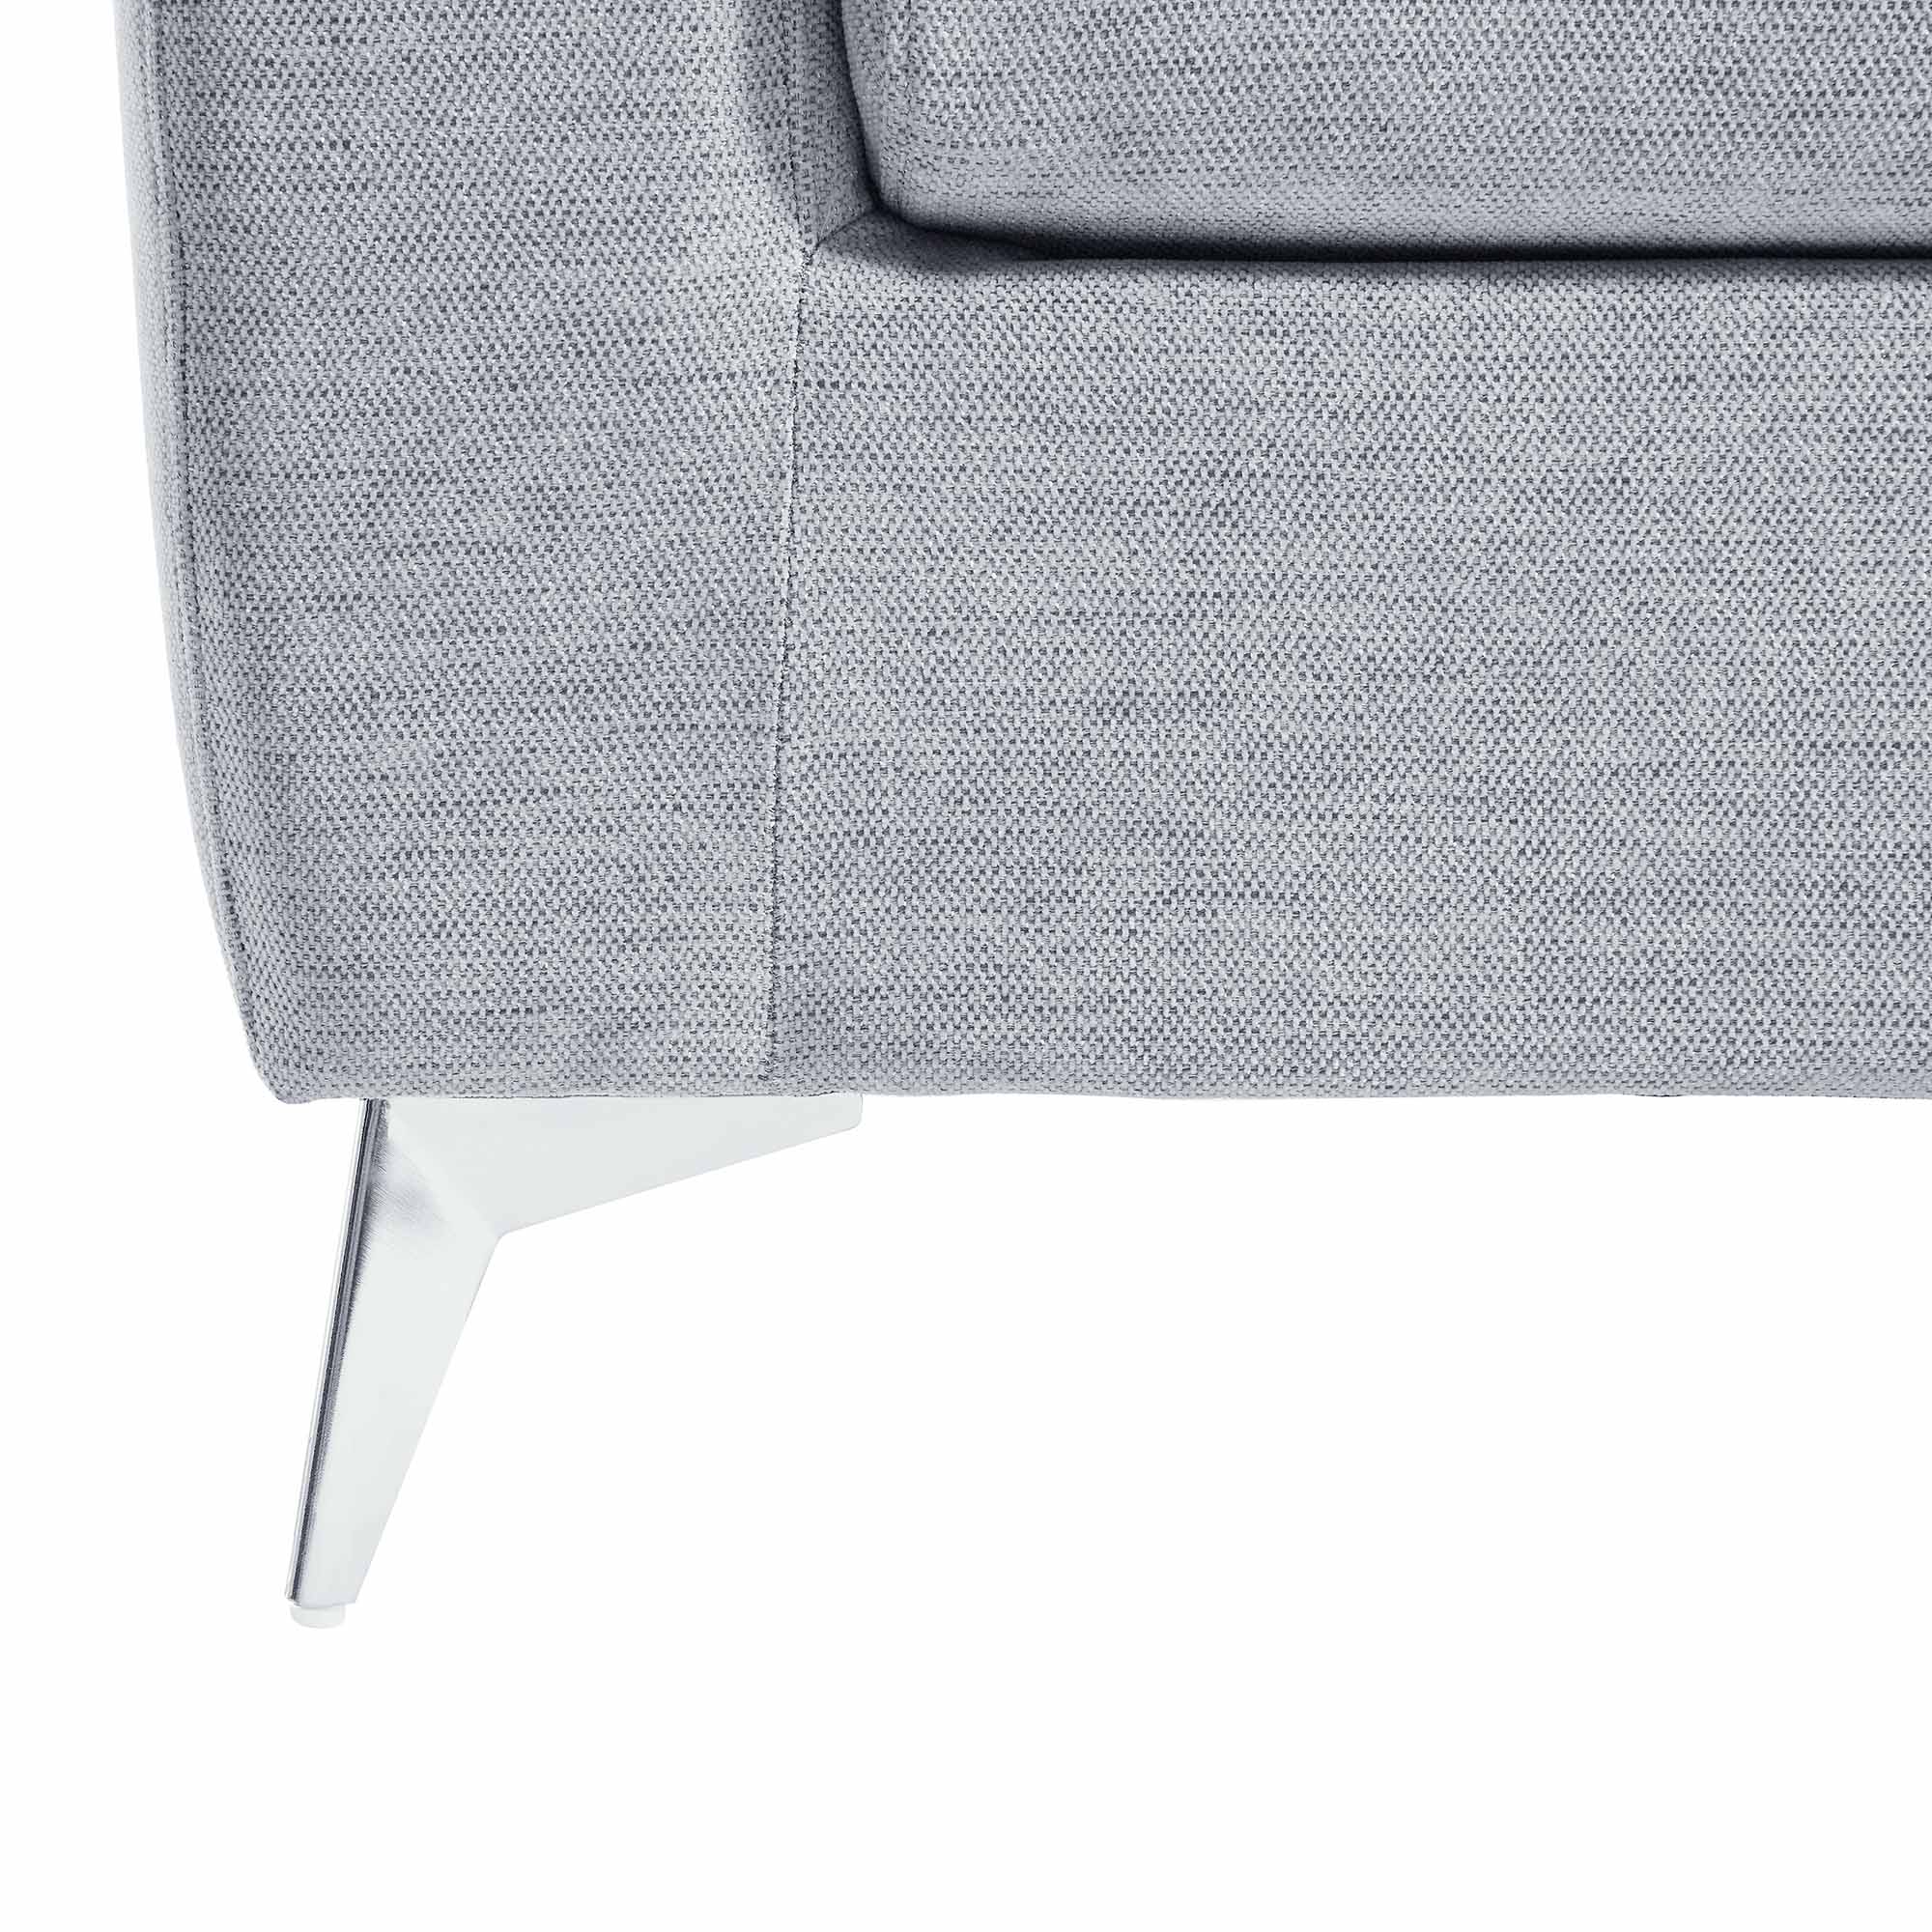 Noak 3-Seater Grey Woven Fabric Sofa with Chrome Legs